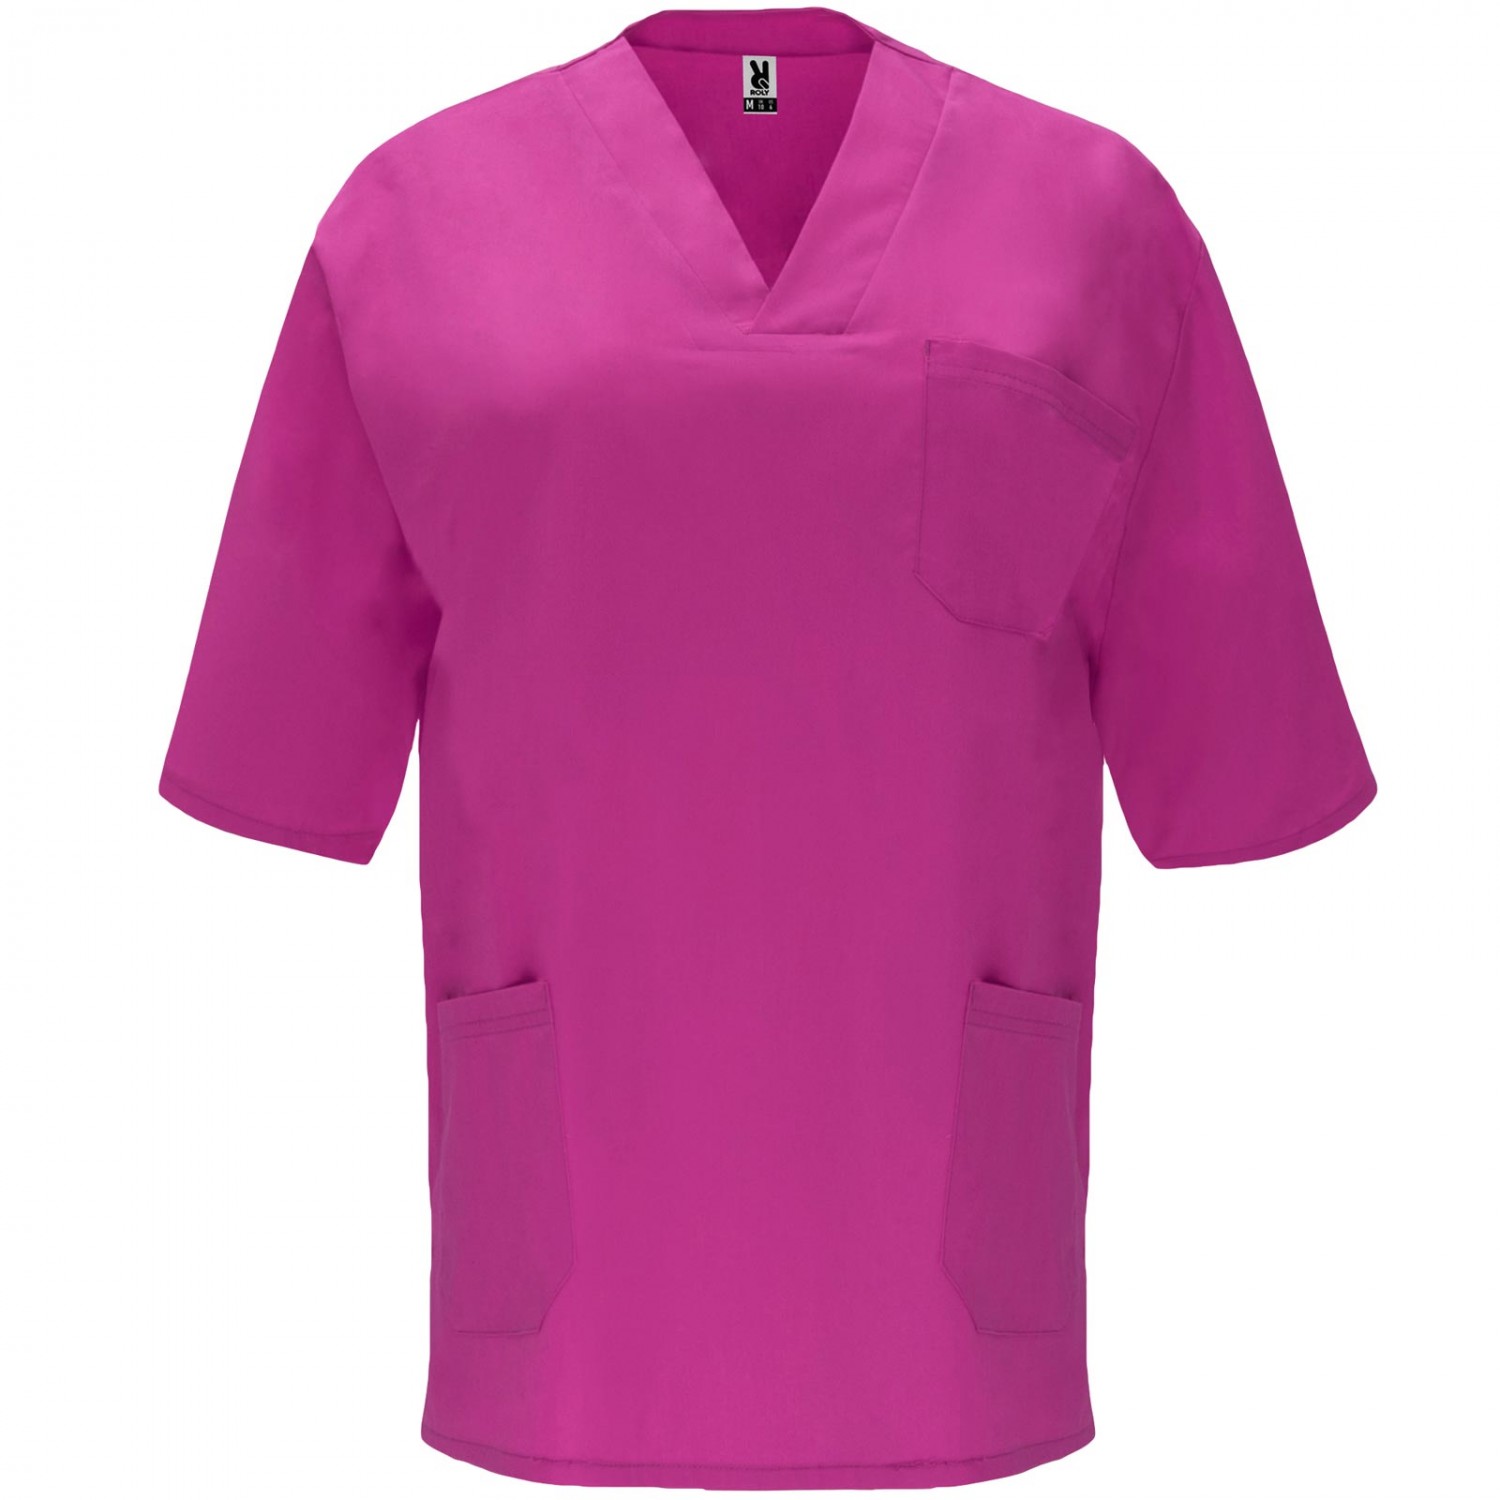 Schlupfkasack Medizin Pflege Unisex Hemd Jacke (Farbe: violett Größe: XS)